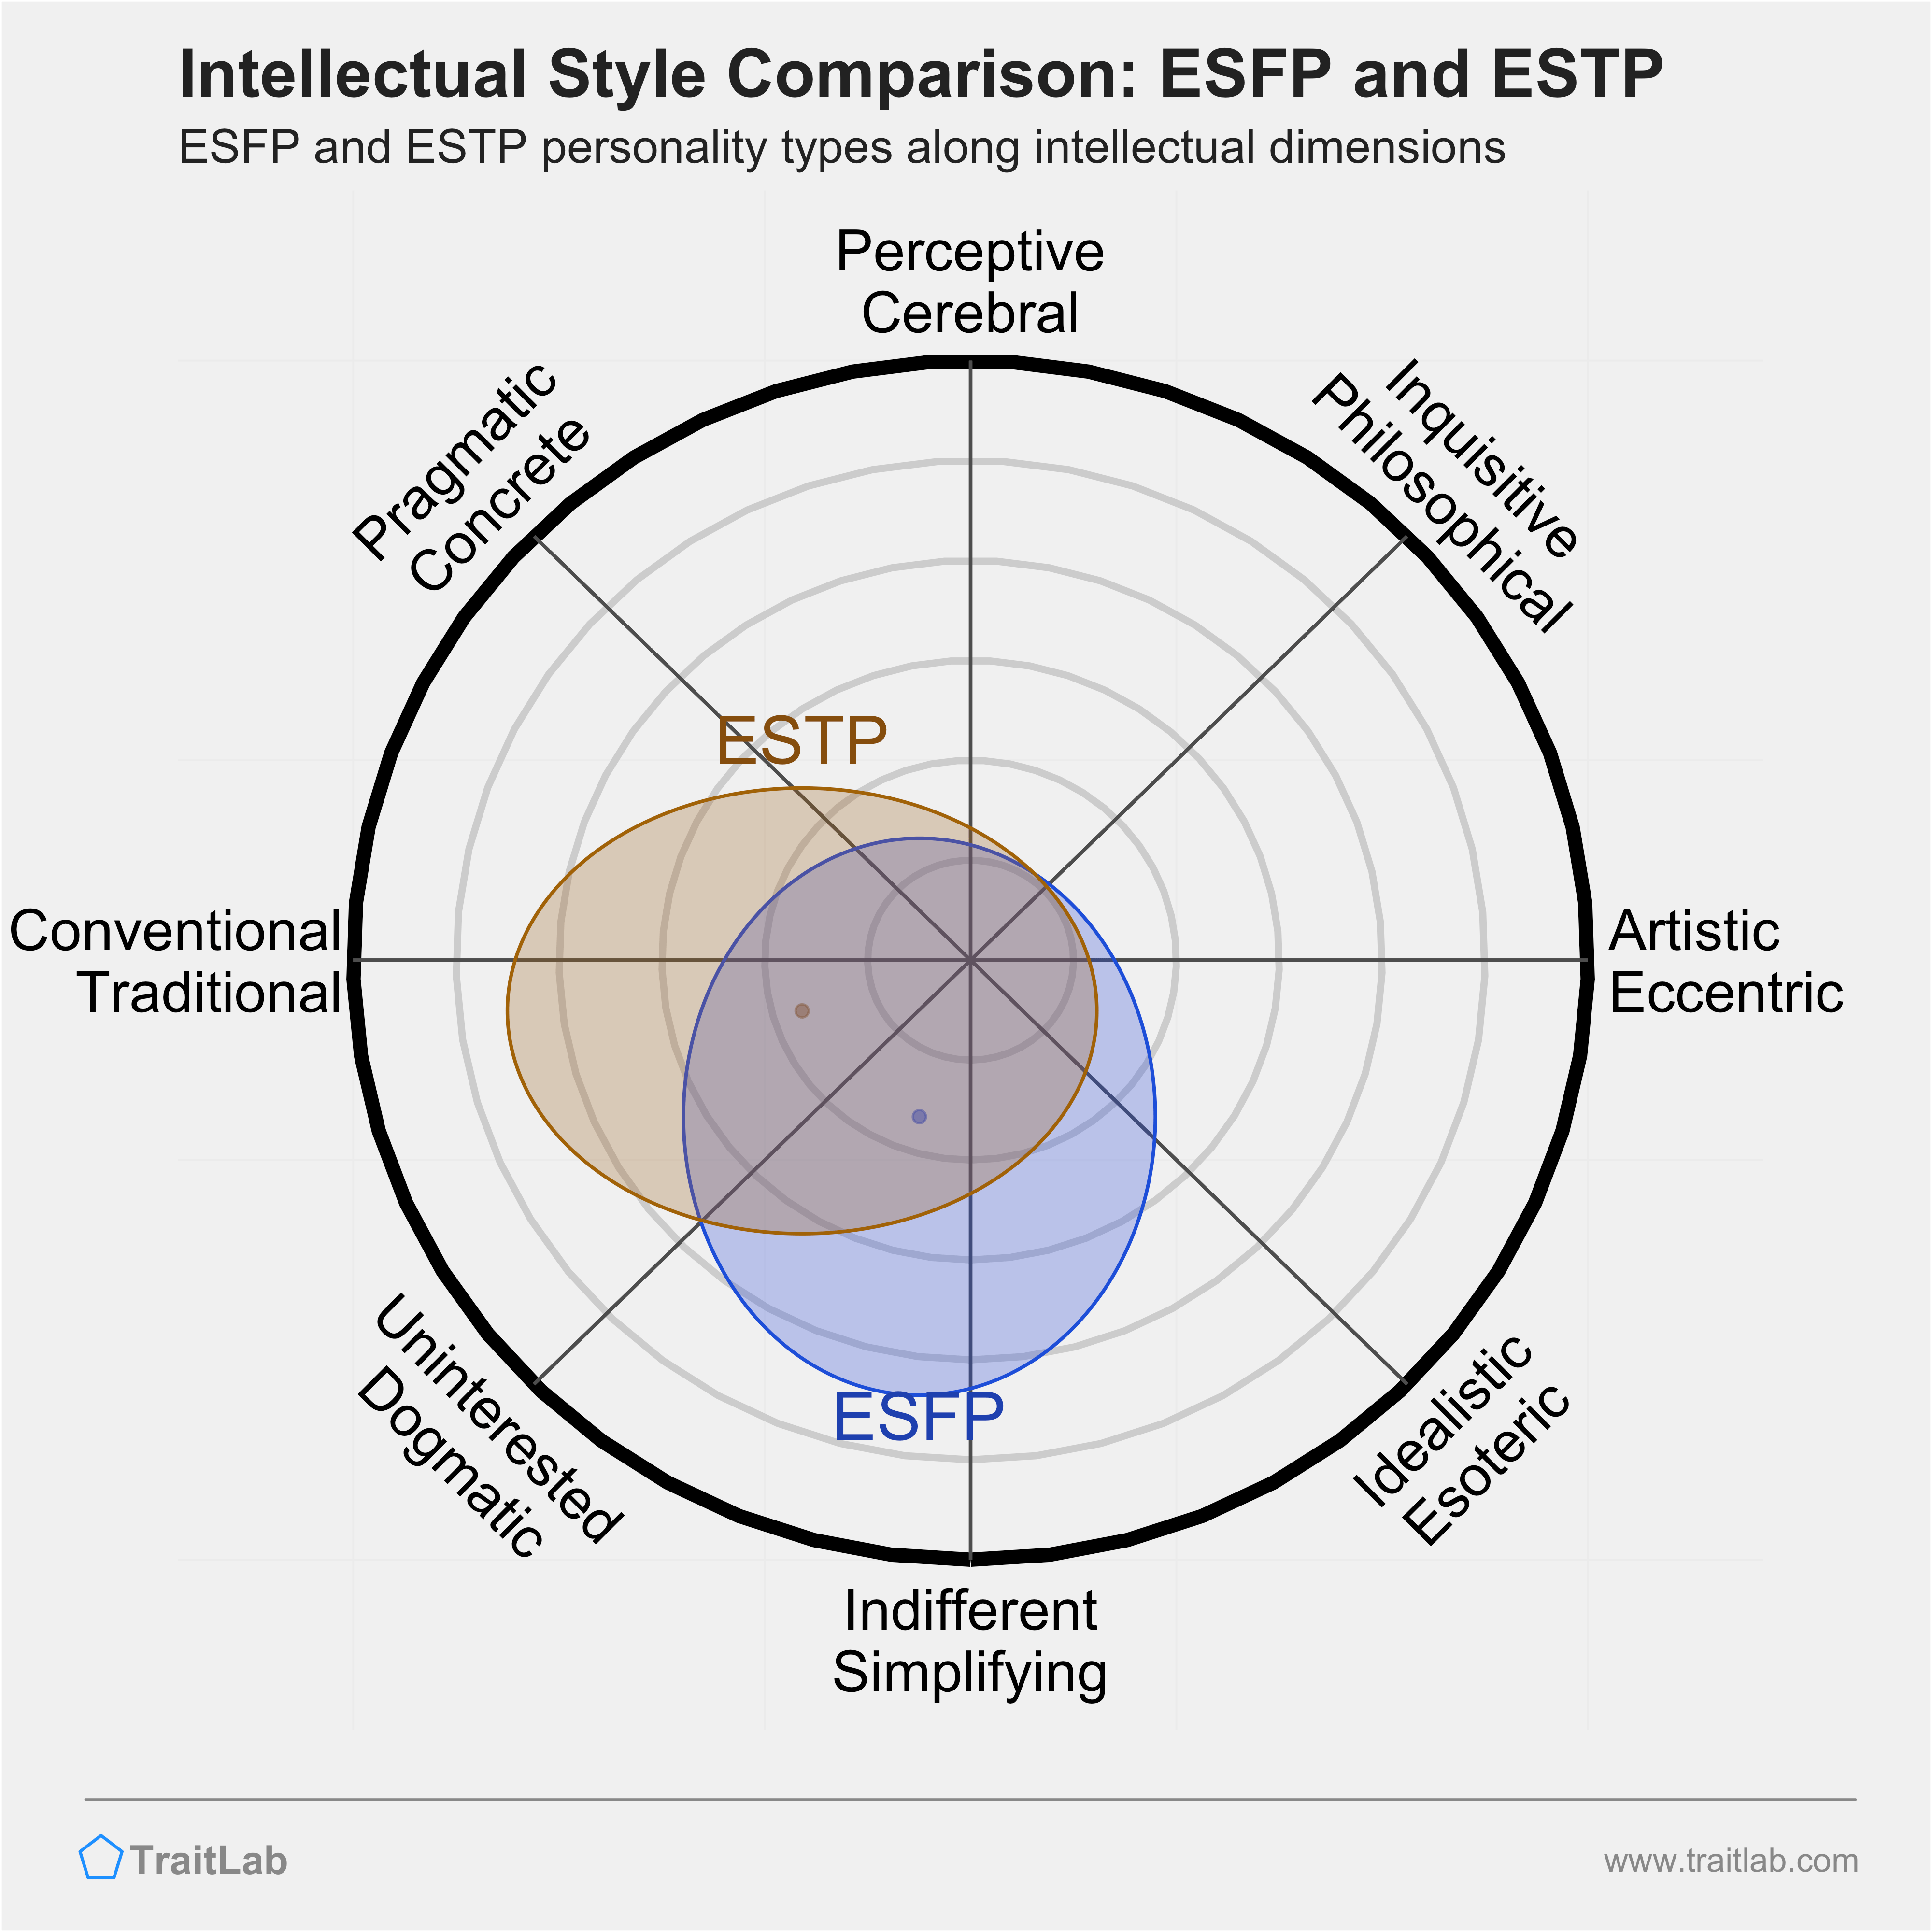 ESFP and ESTP comparison across intellectual dimensions